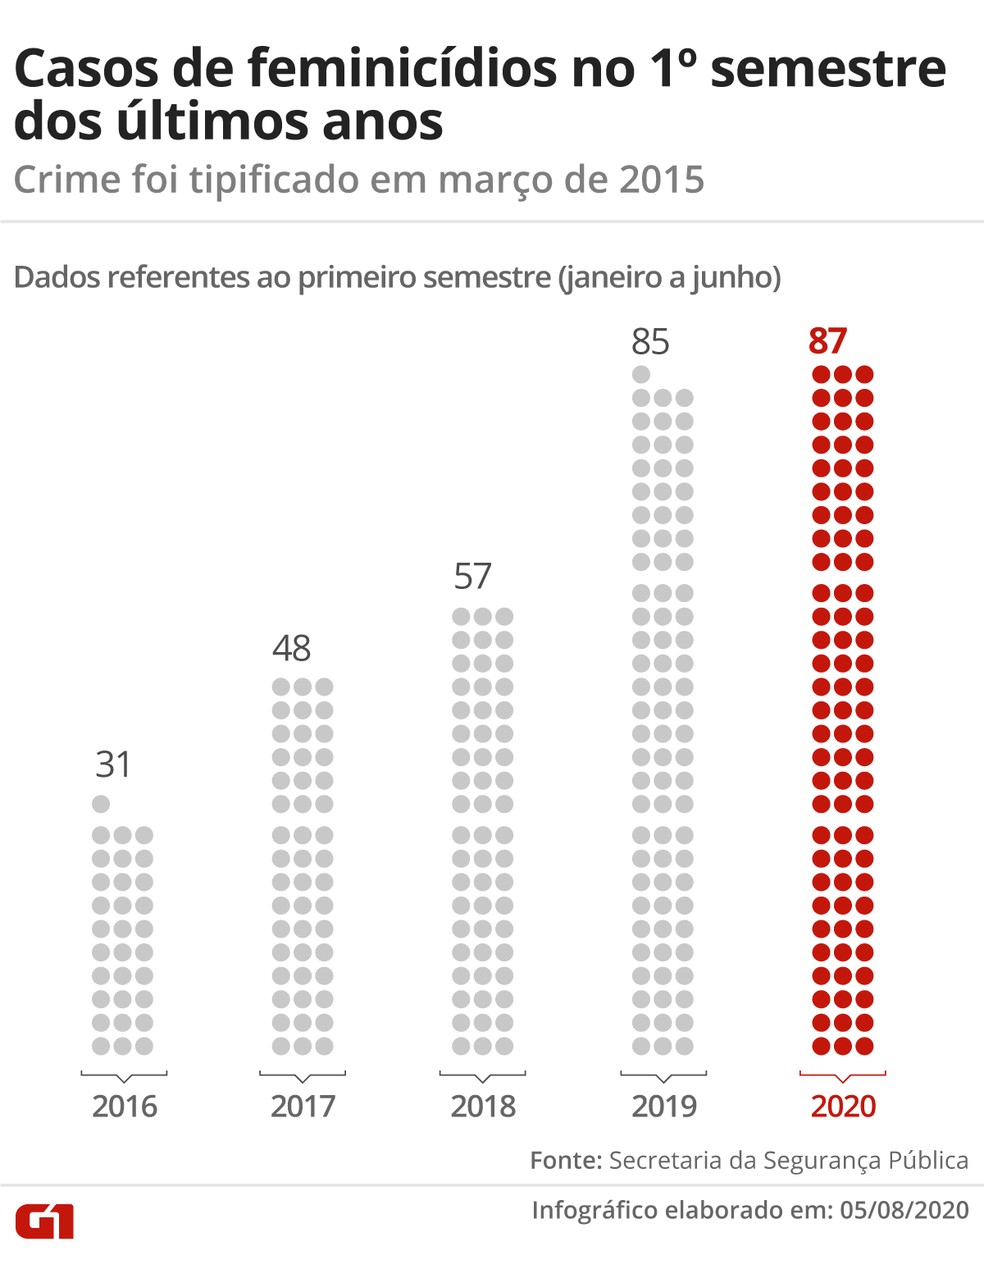 Casos de feminicídio nos primeiros semestres de 2016 a 2020 — Foto: Arte/G1